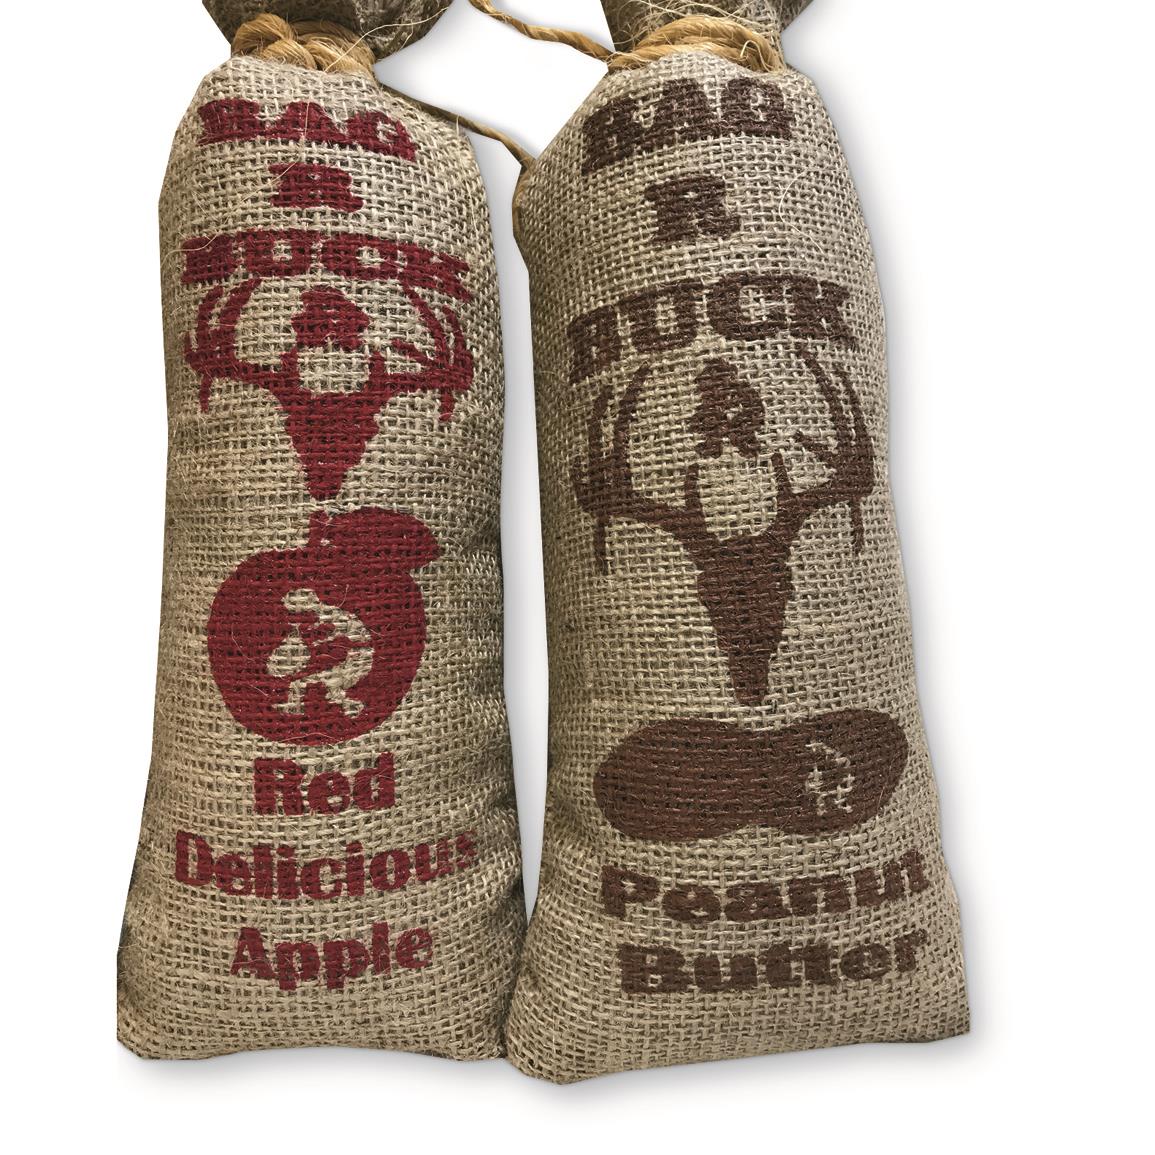 Bag R Buck 2-Flavor Packs, Red Apple / Peanut Butter